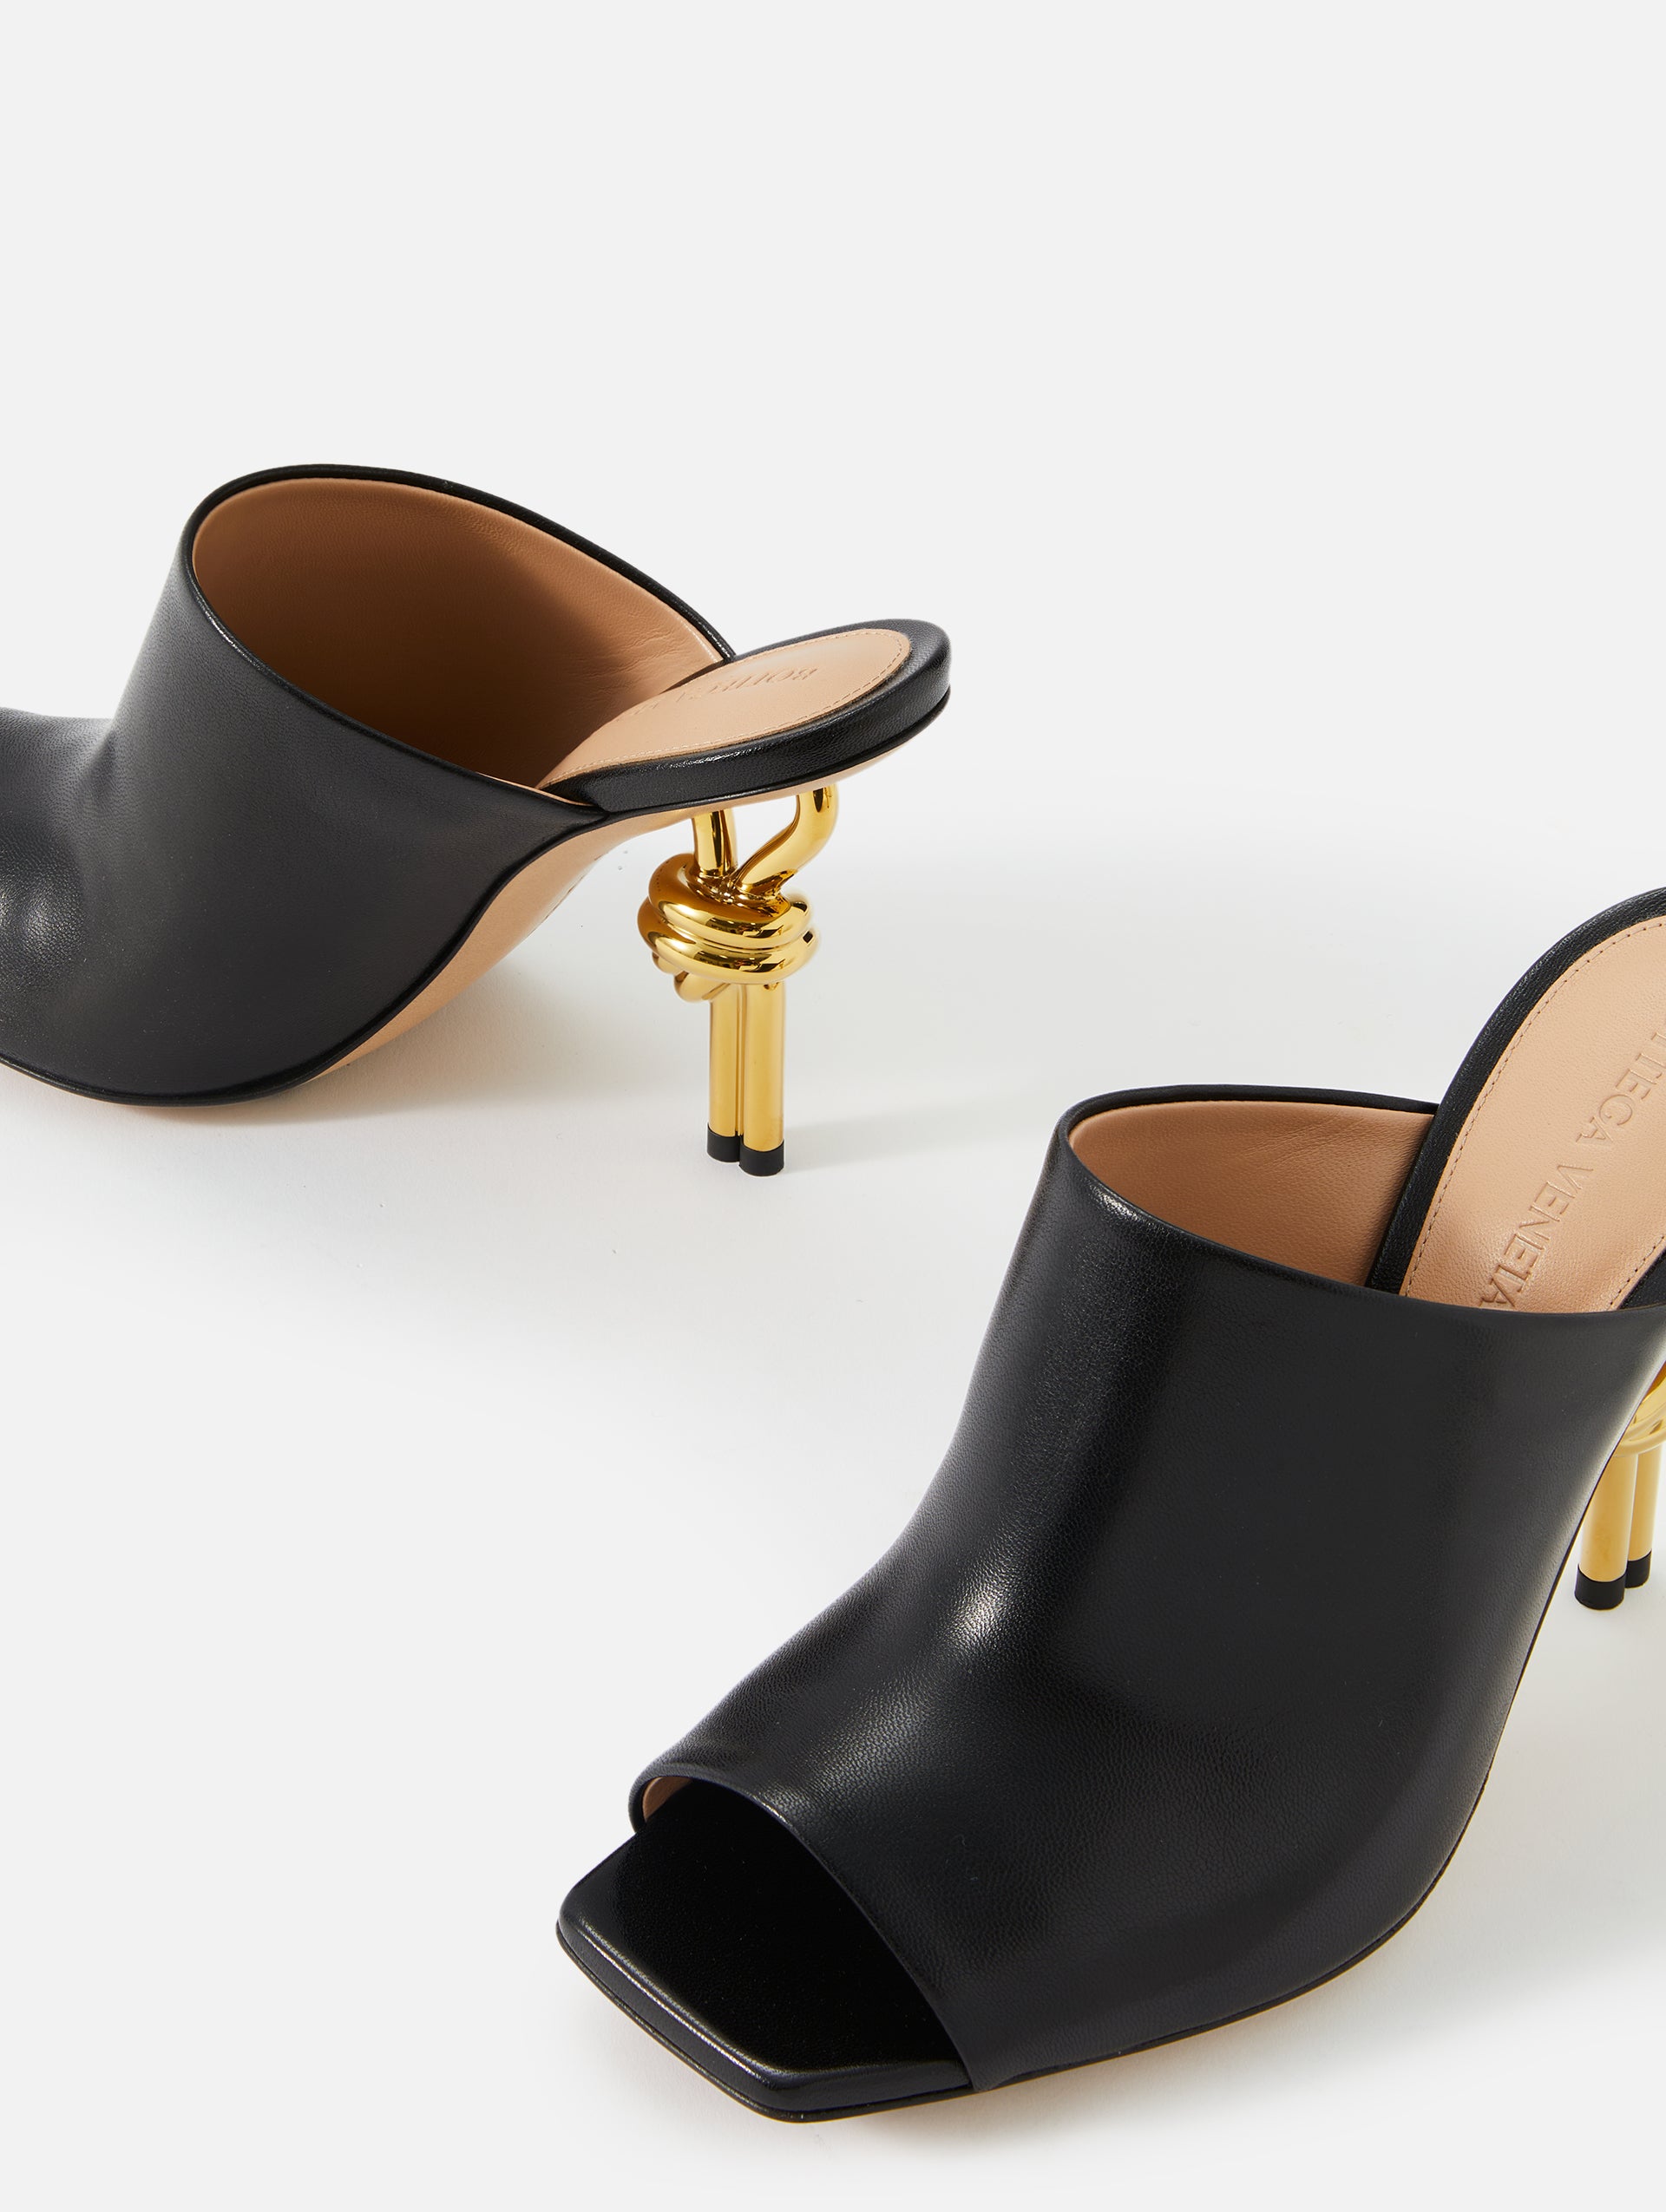 Bottega Veneta® Women's Knot Mule in Black. Shop online now.